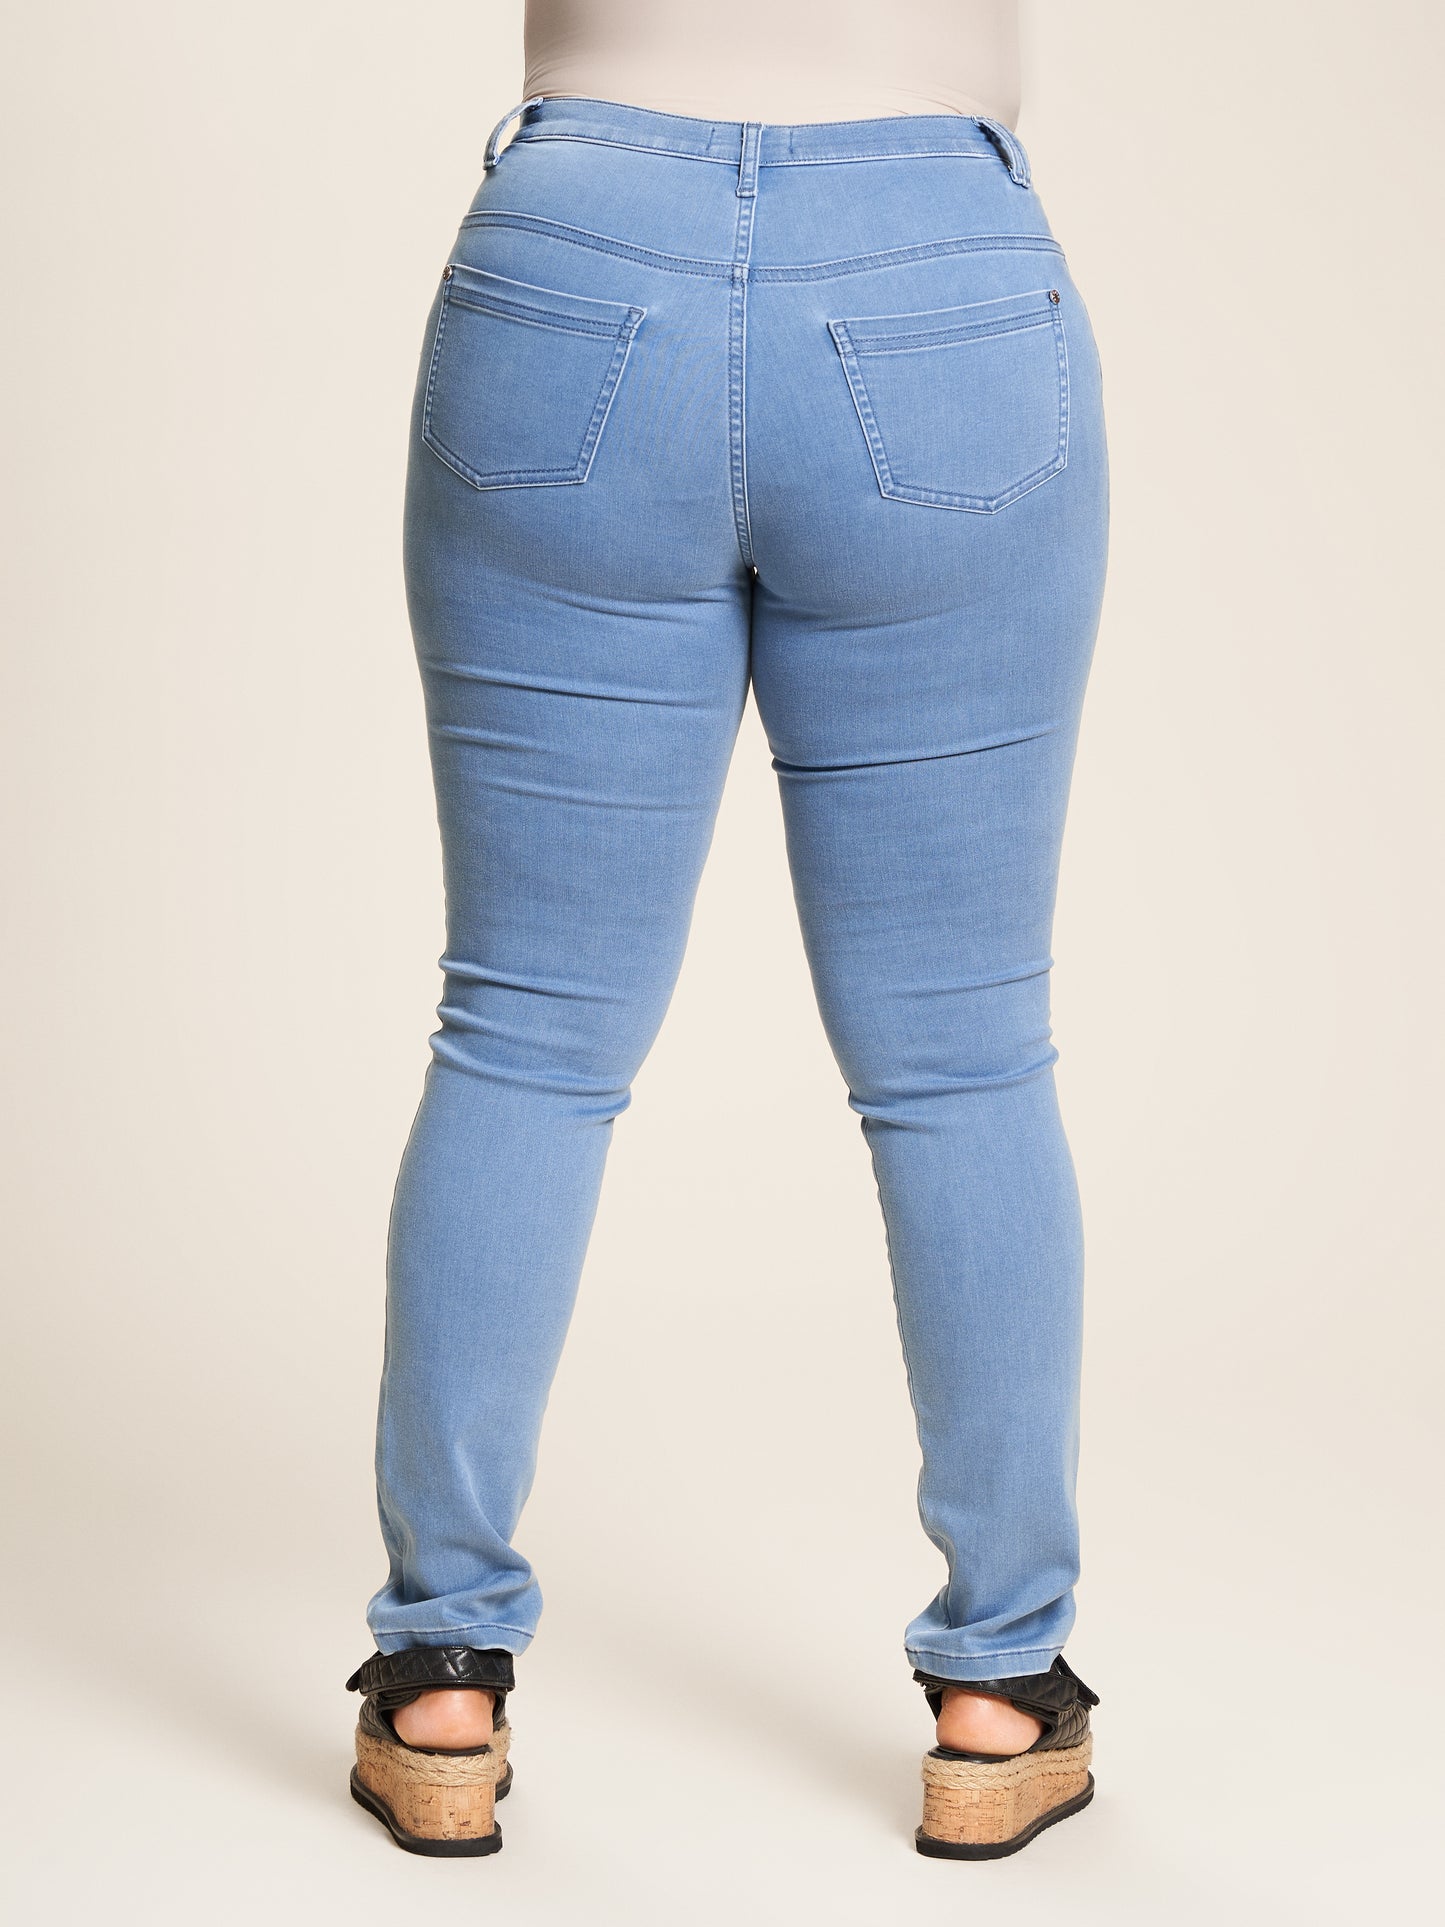 Studio Strækbar jeans fra STUDIO CLOTHING Pants Light Denim Ashley Length 30"